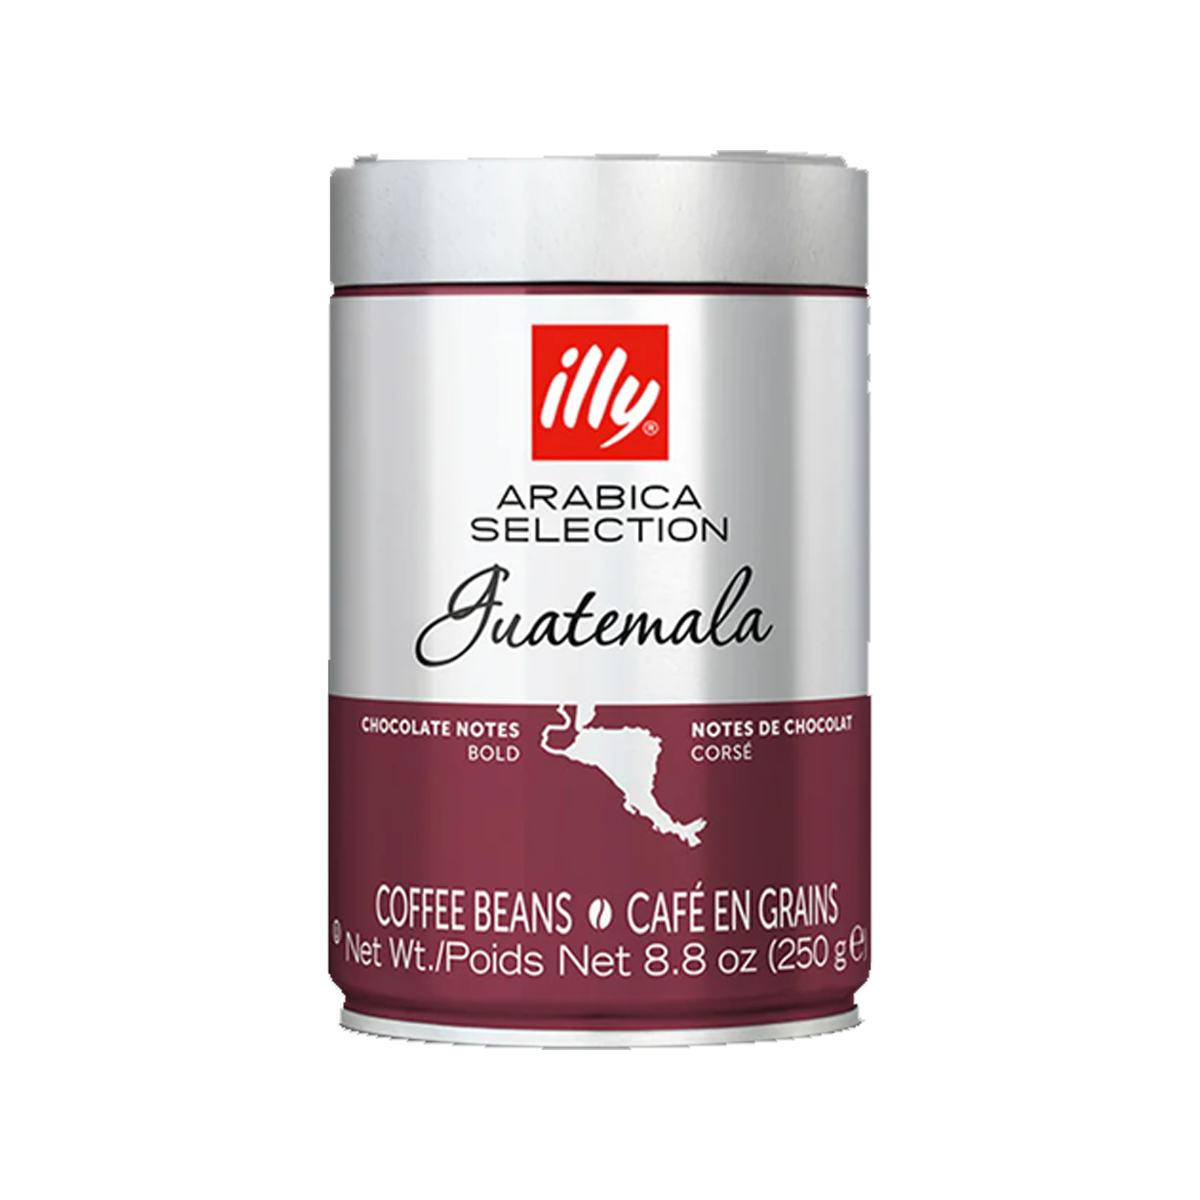 illy Arabica Selection Guatemalan Coffee Bean 250g